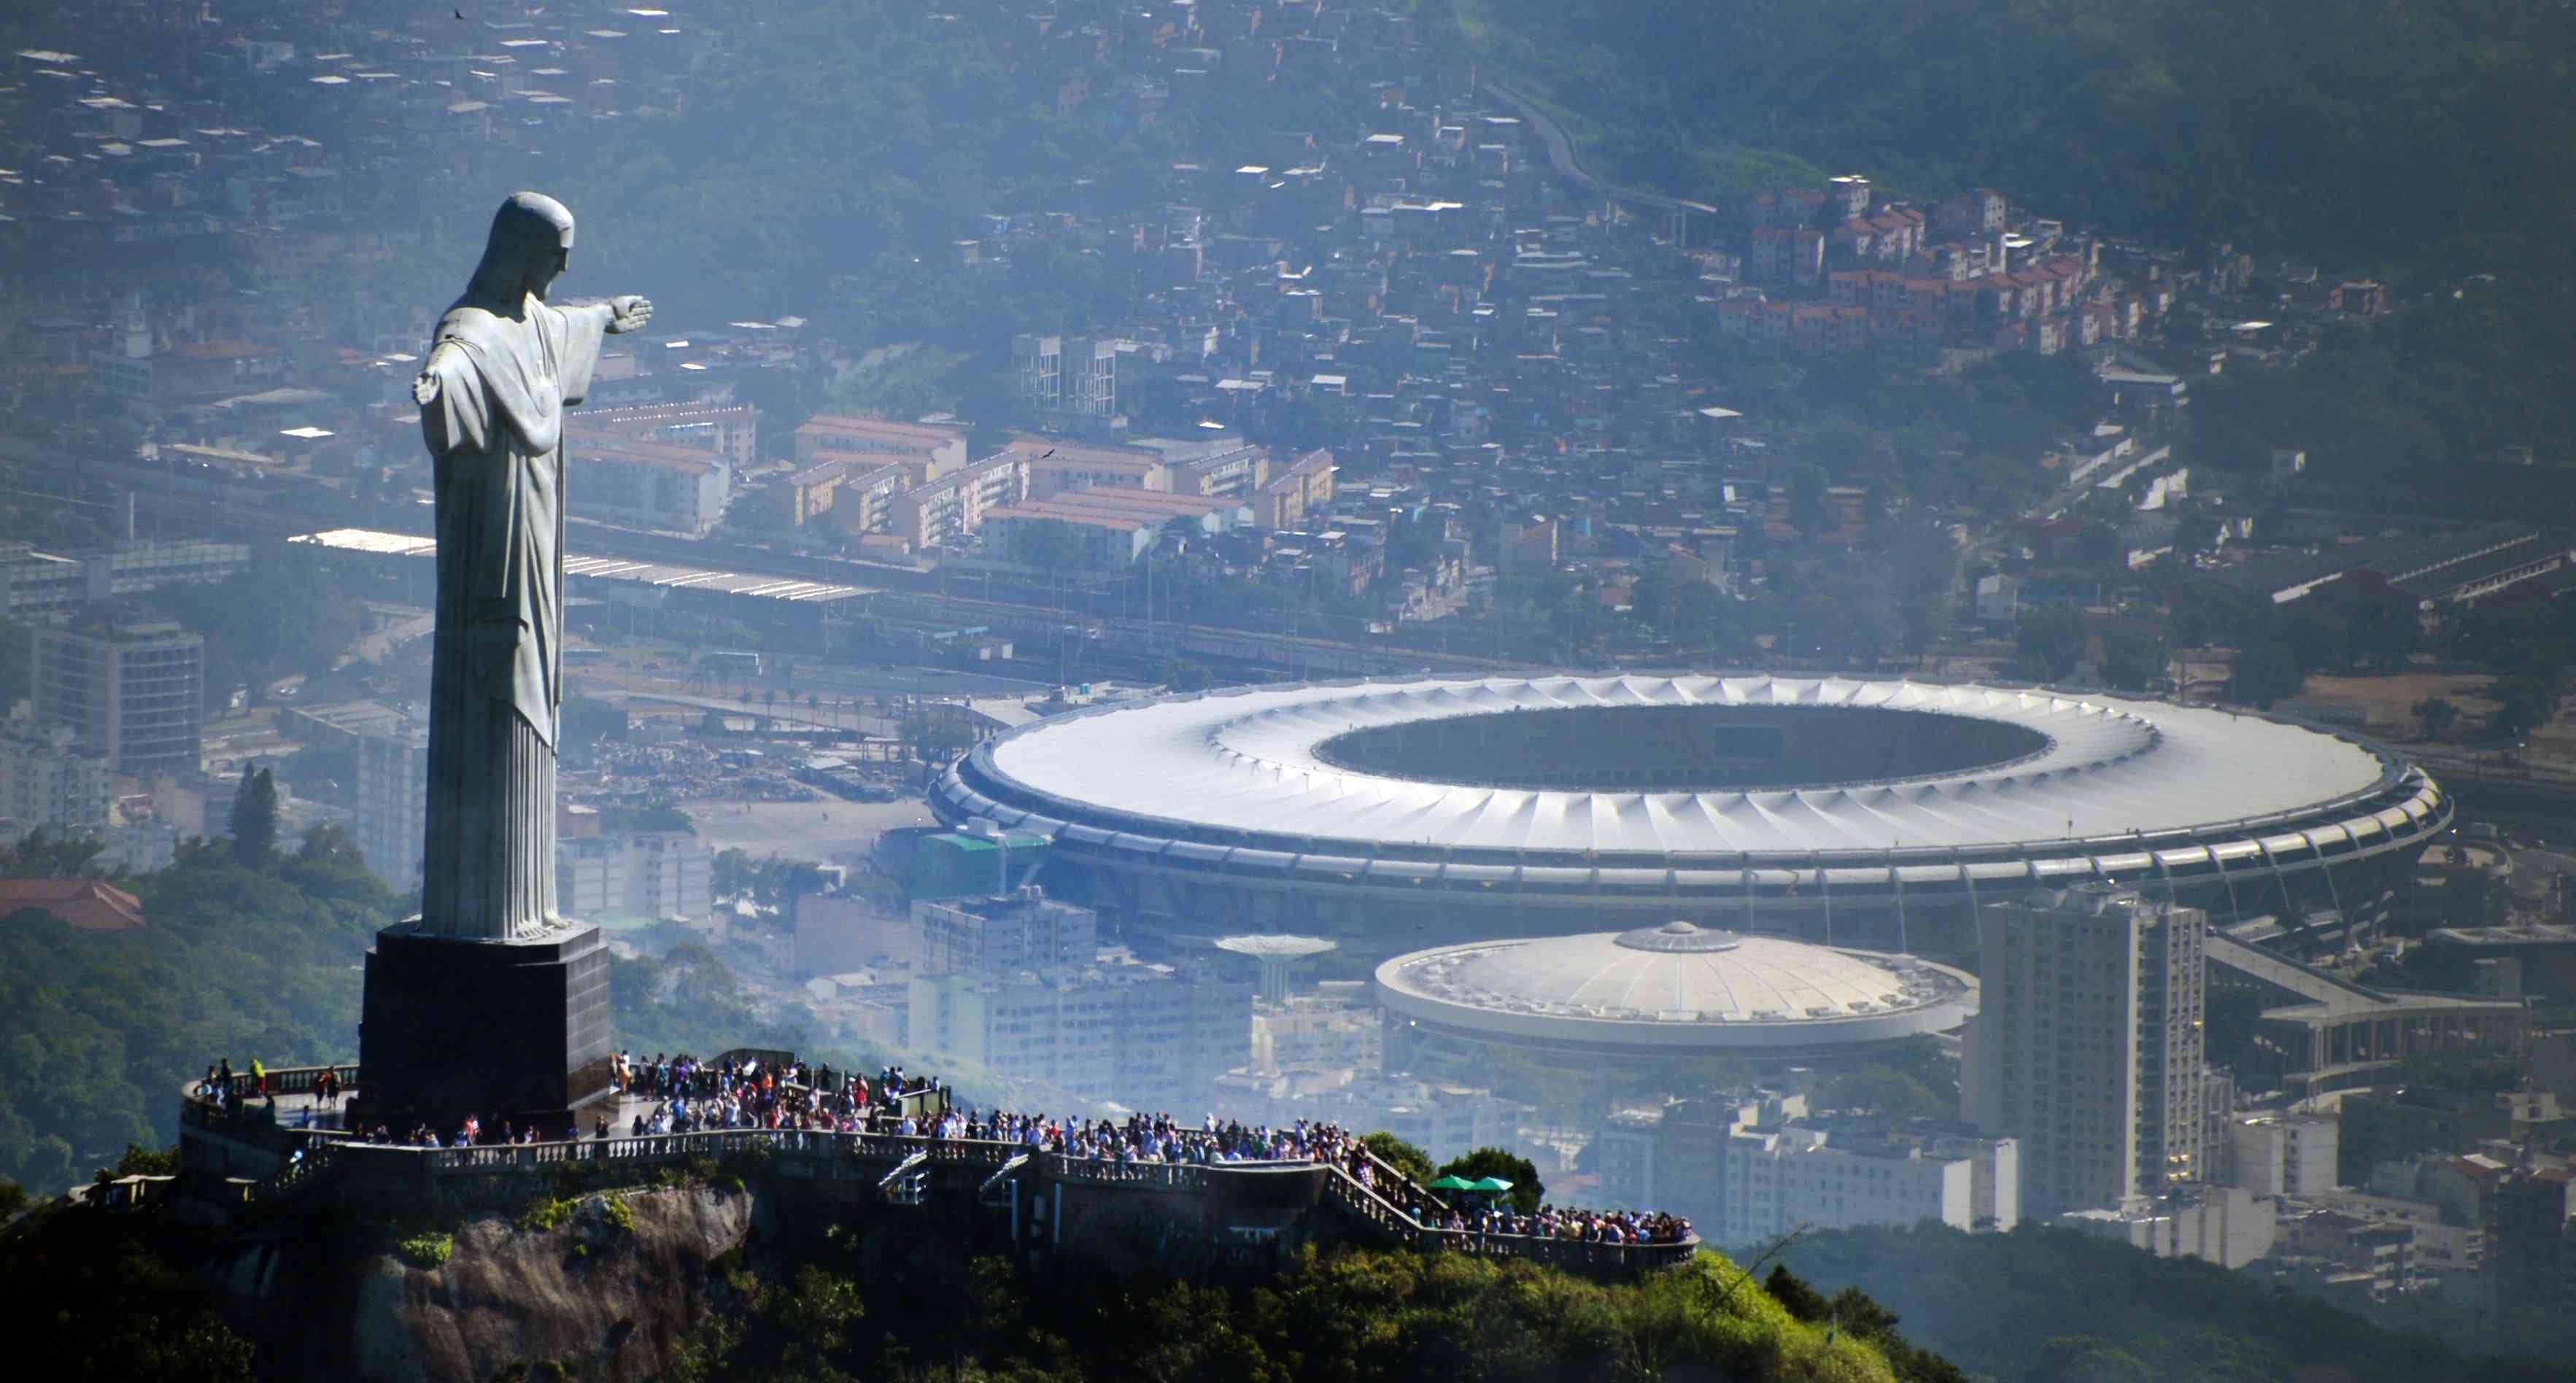 Christ the Redeemer and Maracana Stadium in Rio De Janeiro, Brazil